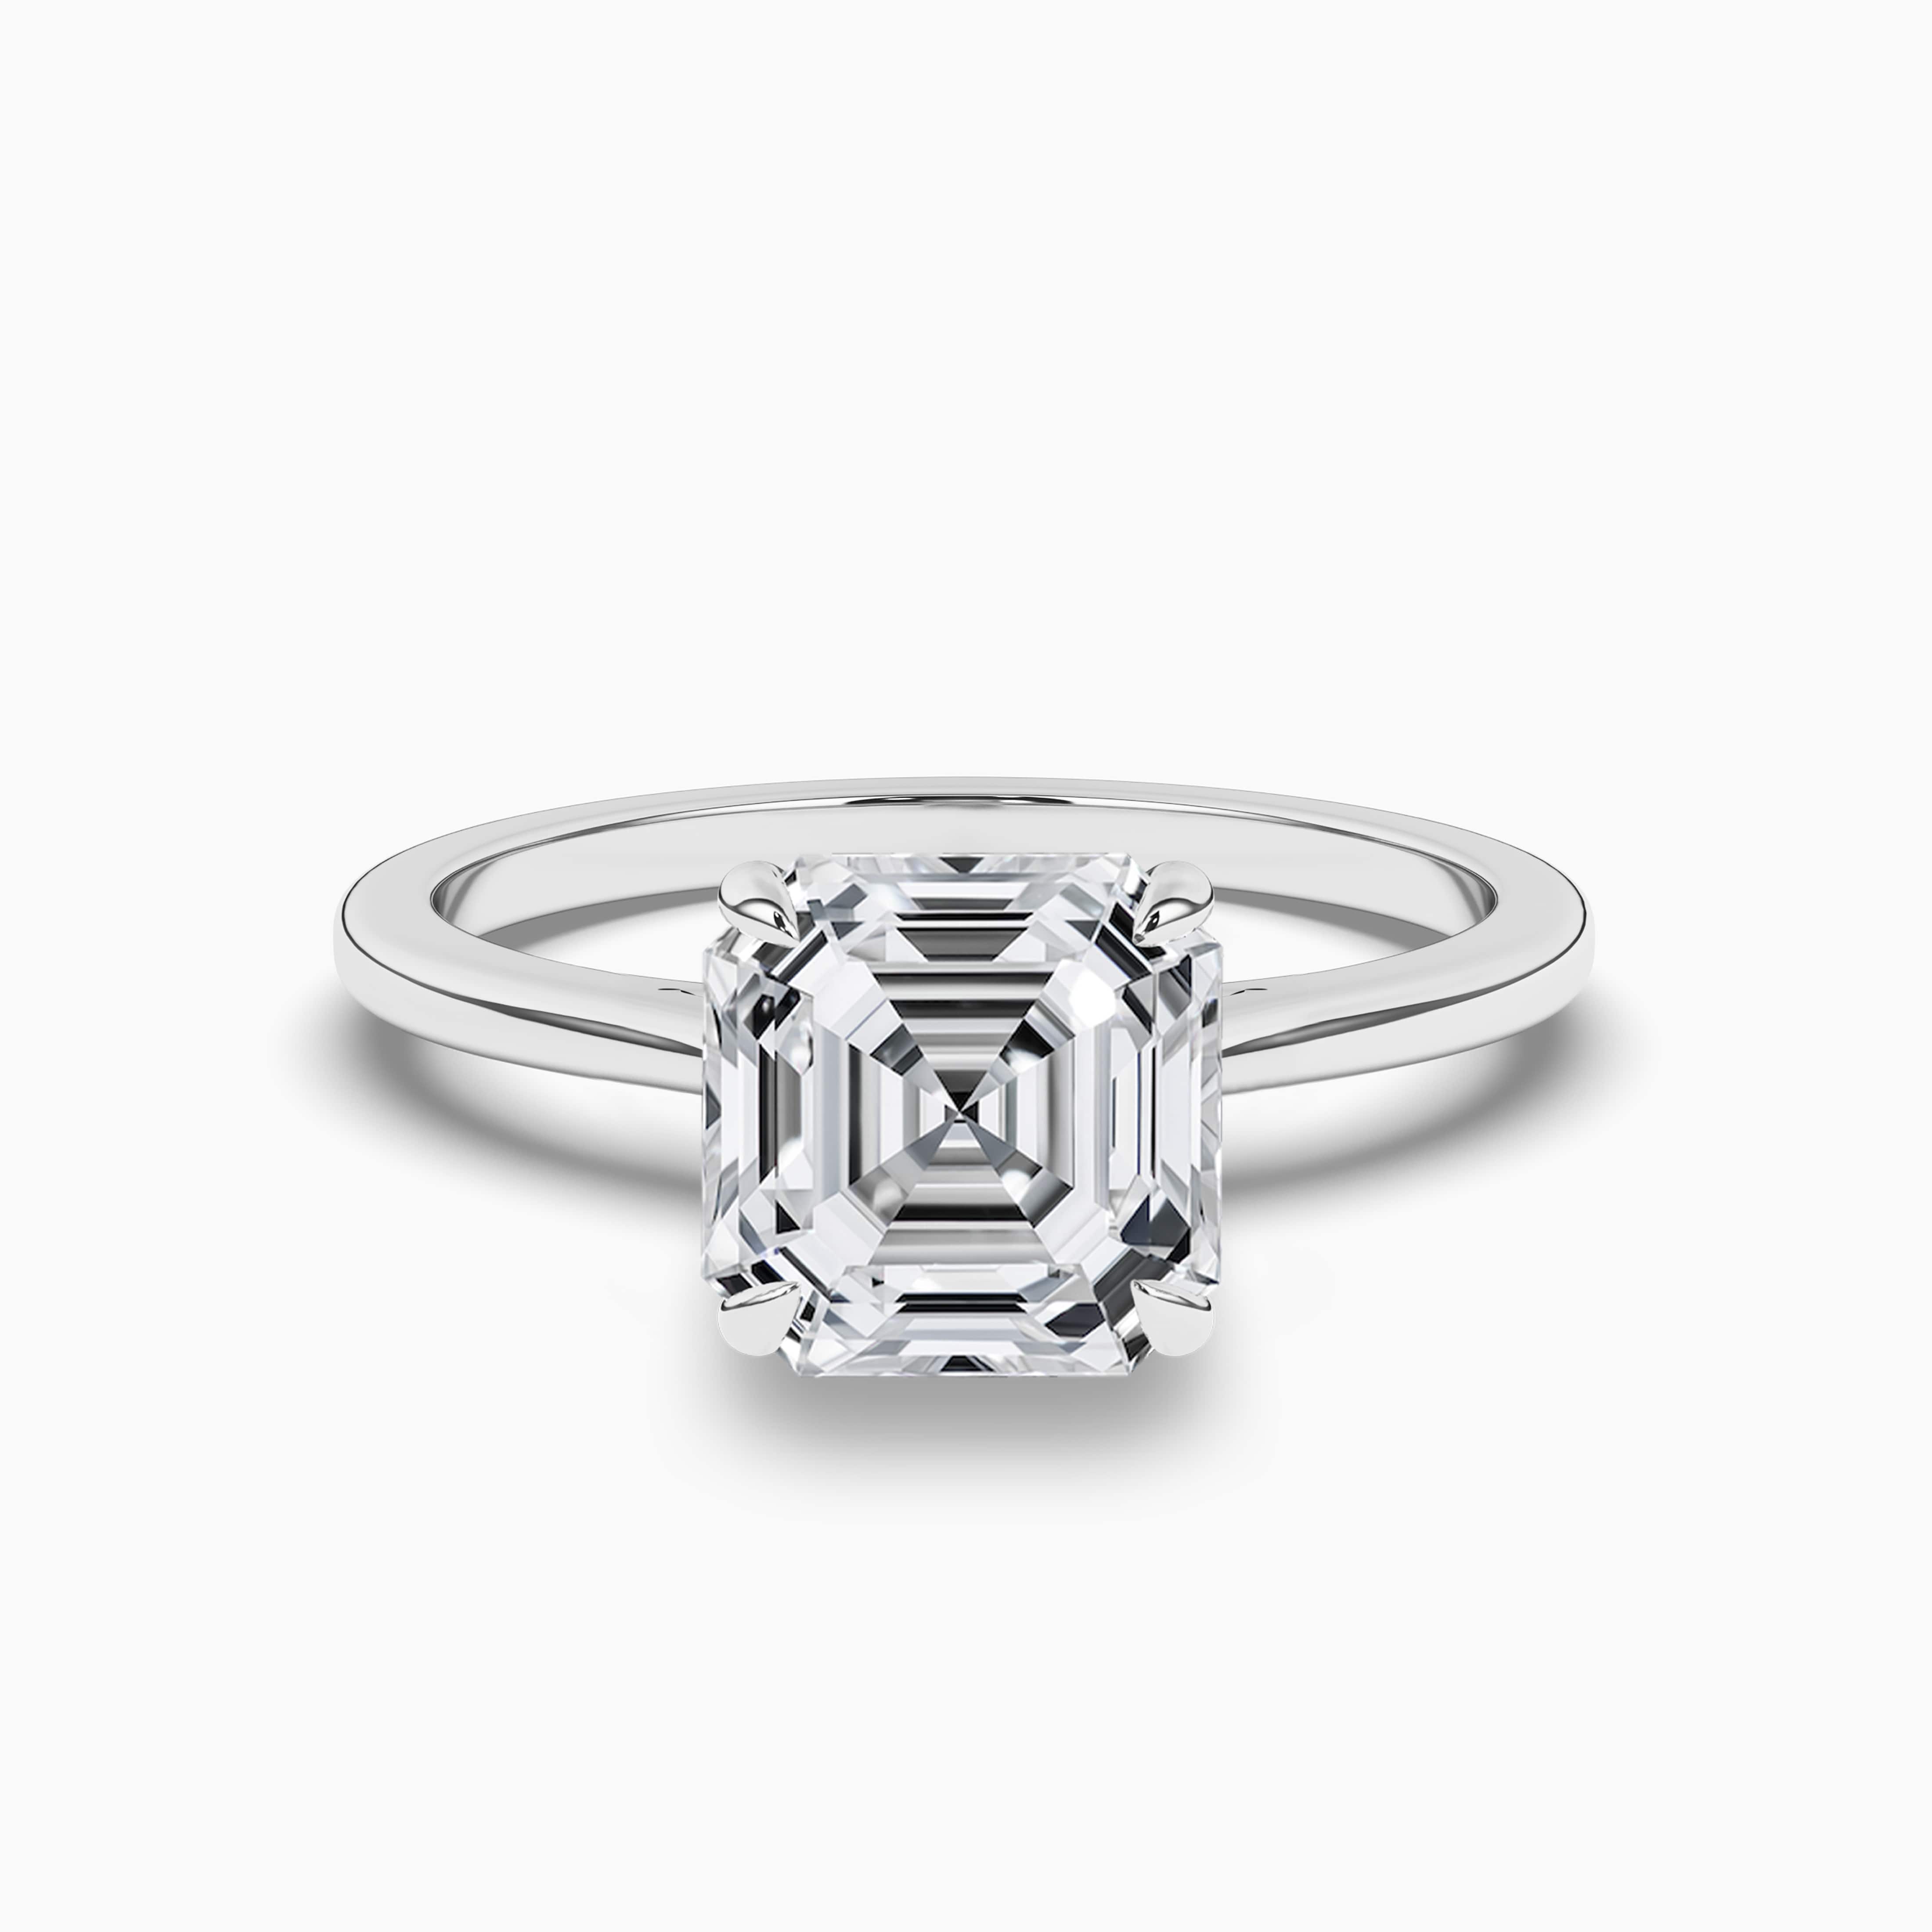  Asscher-Cut Diamond Engagement Ring in White Gold